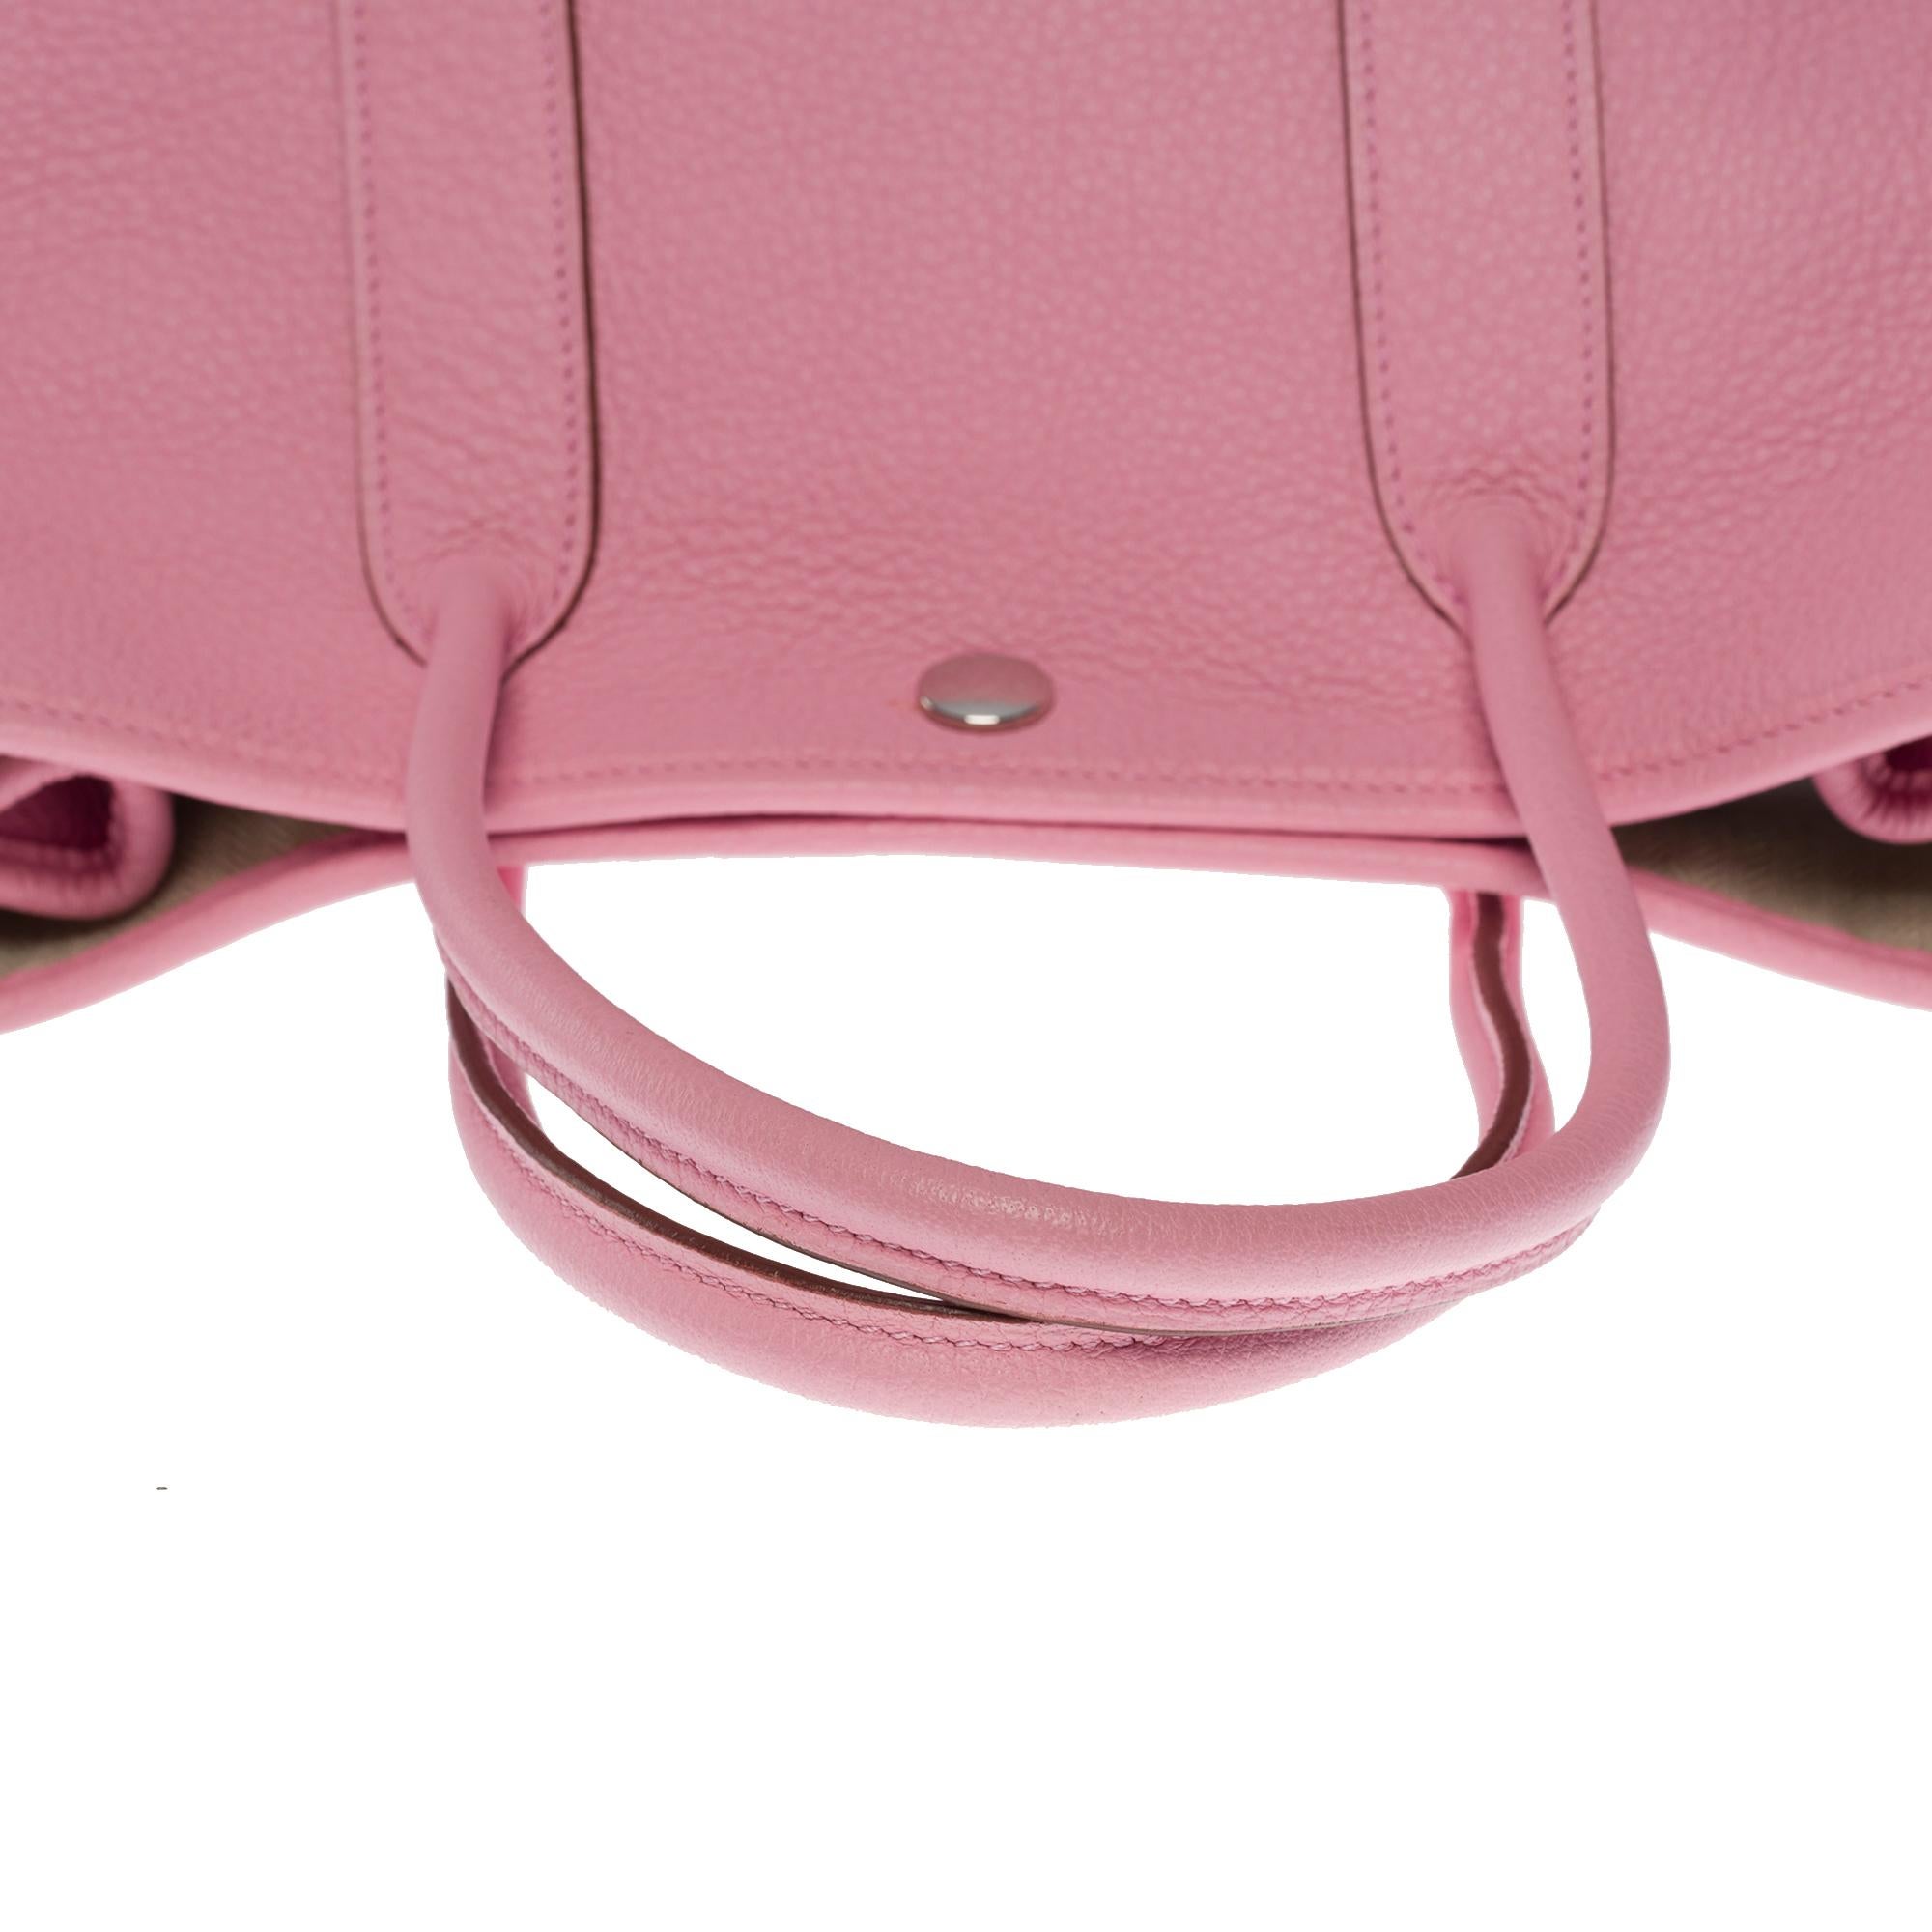 Gorgeous Hermès Garden Party TPM Tote bag in Sakura Pink Negonda leather, SHW For Sale 2